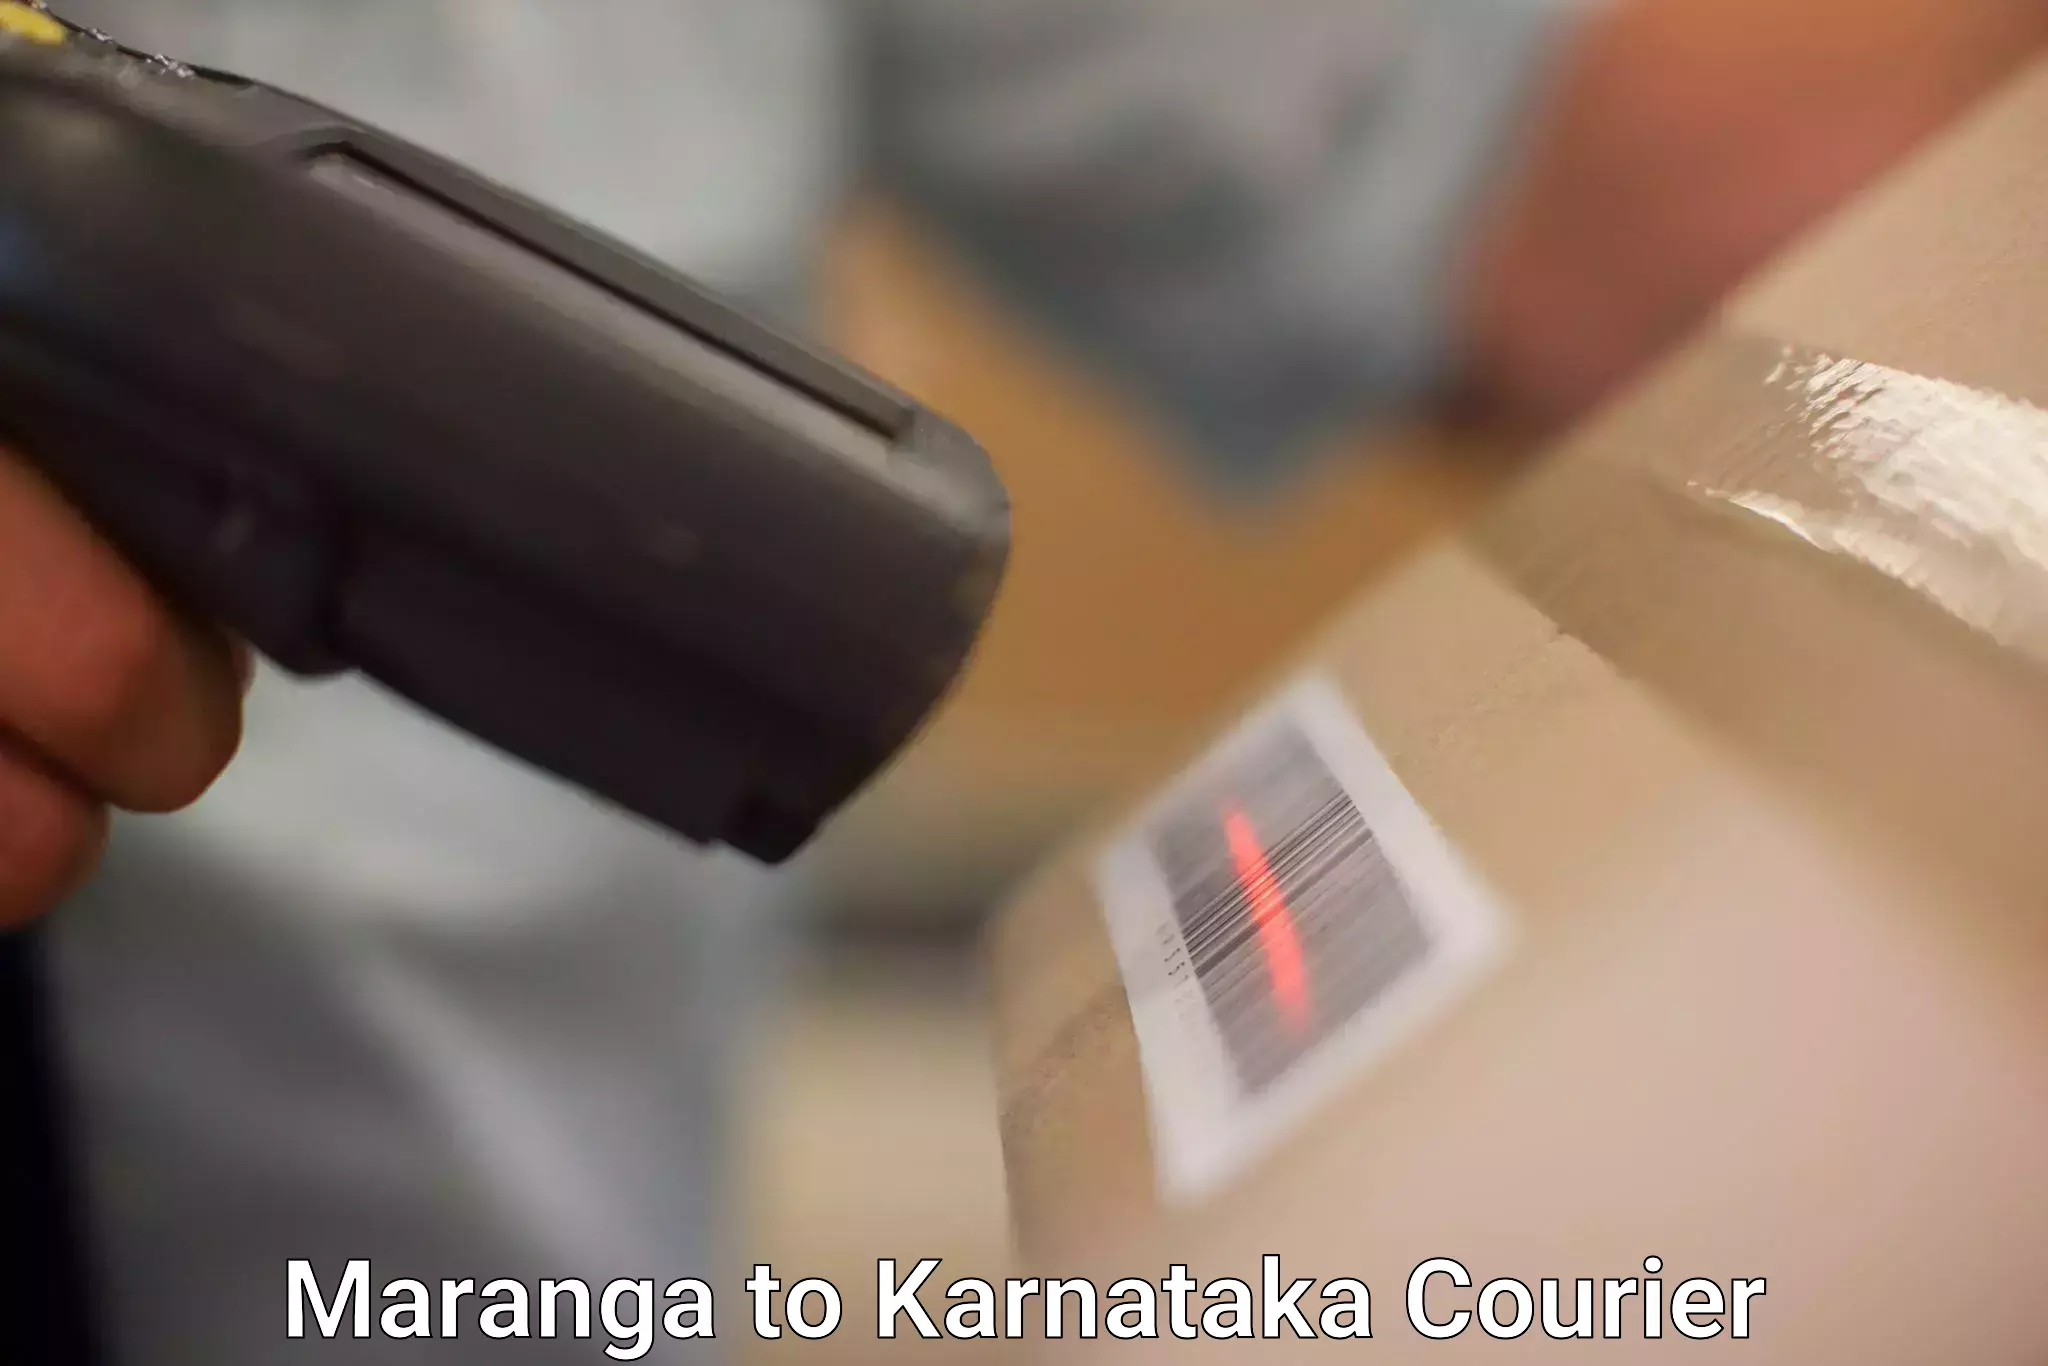 Small business couriers Maranga to Uttara Kannada